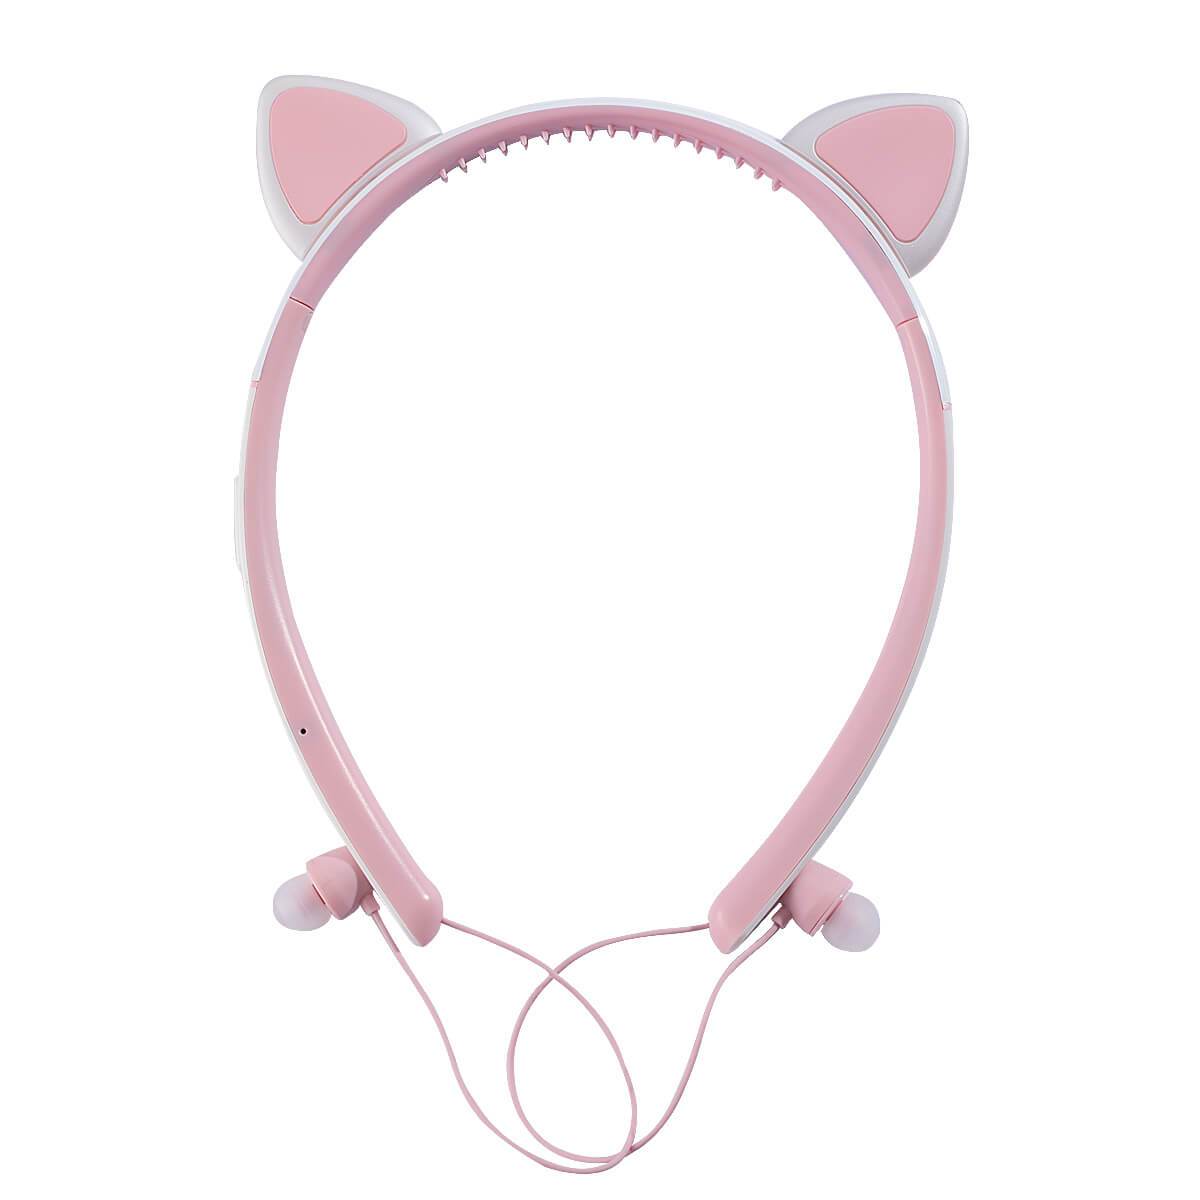 Padmate M1 Bluetooth Headphones For Girls